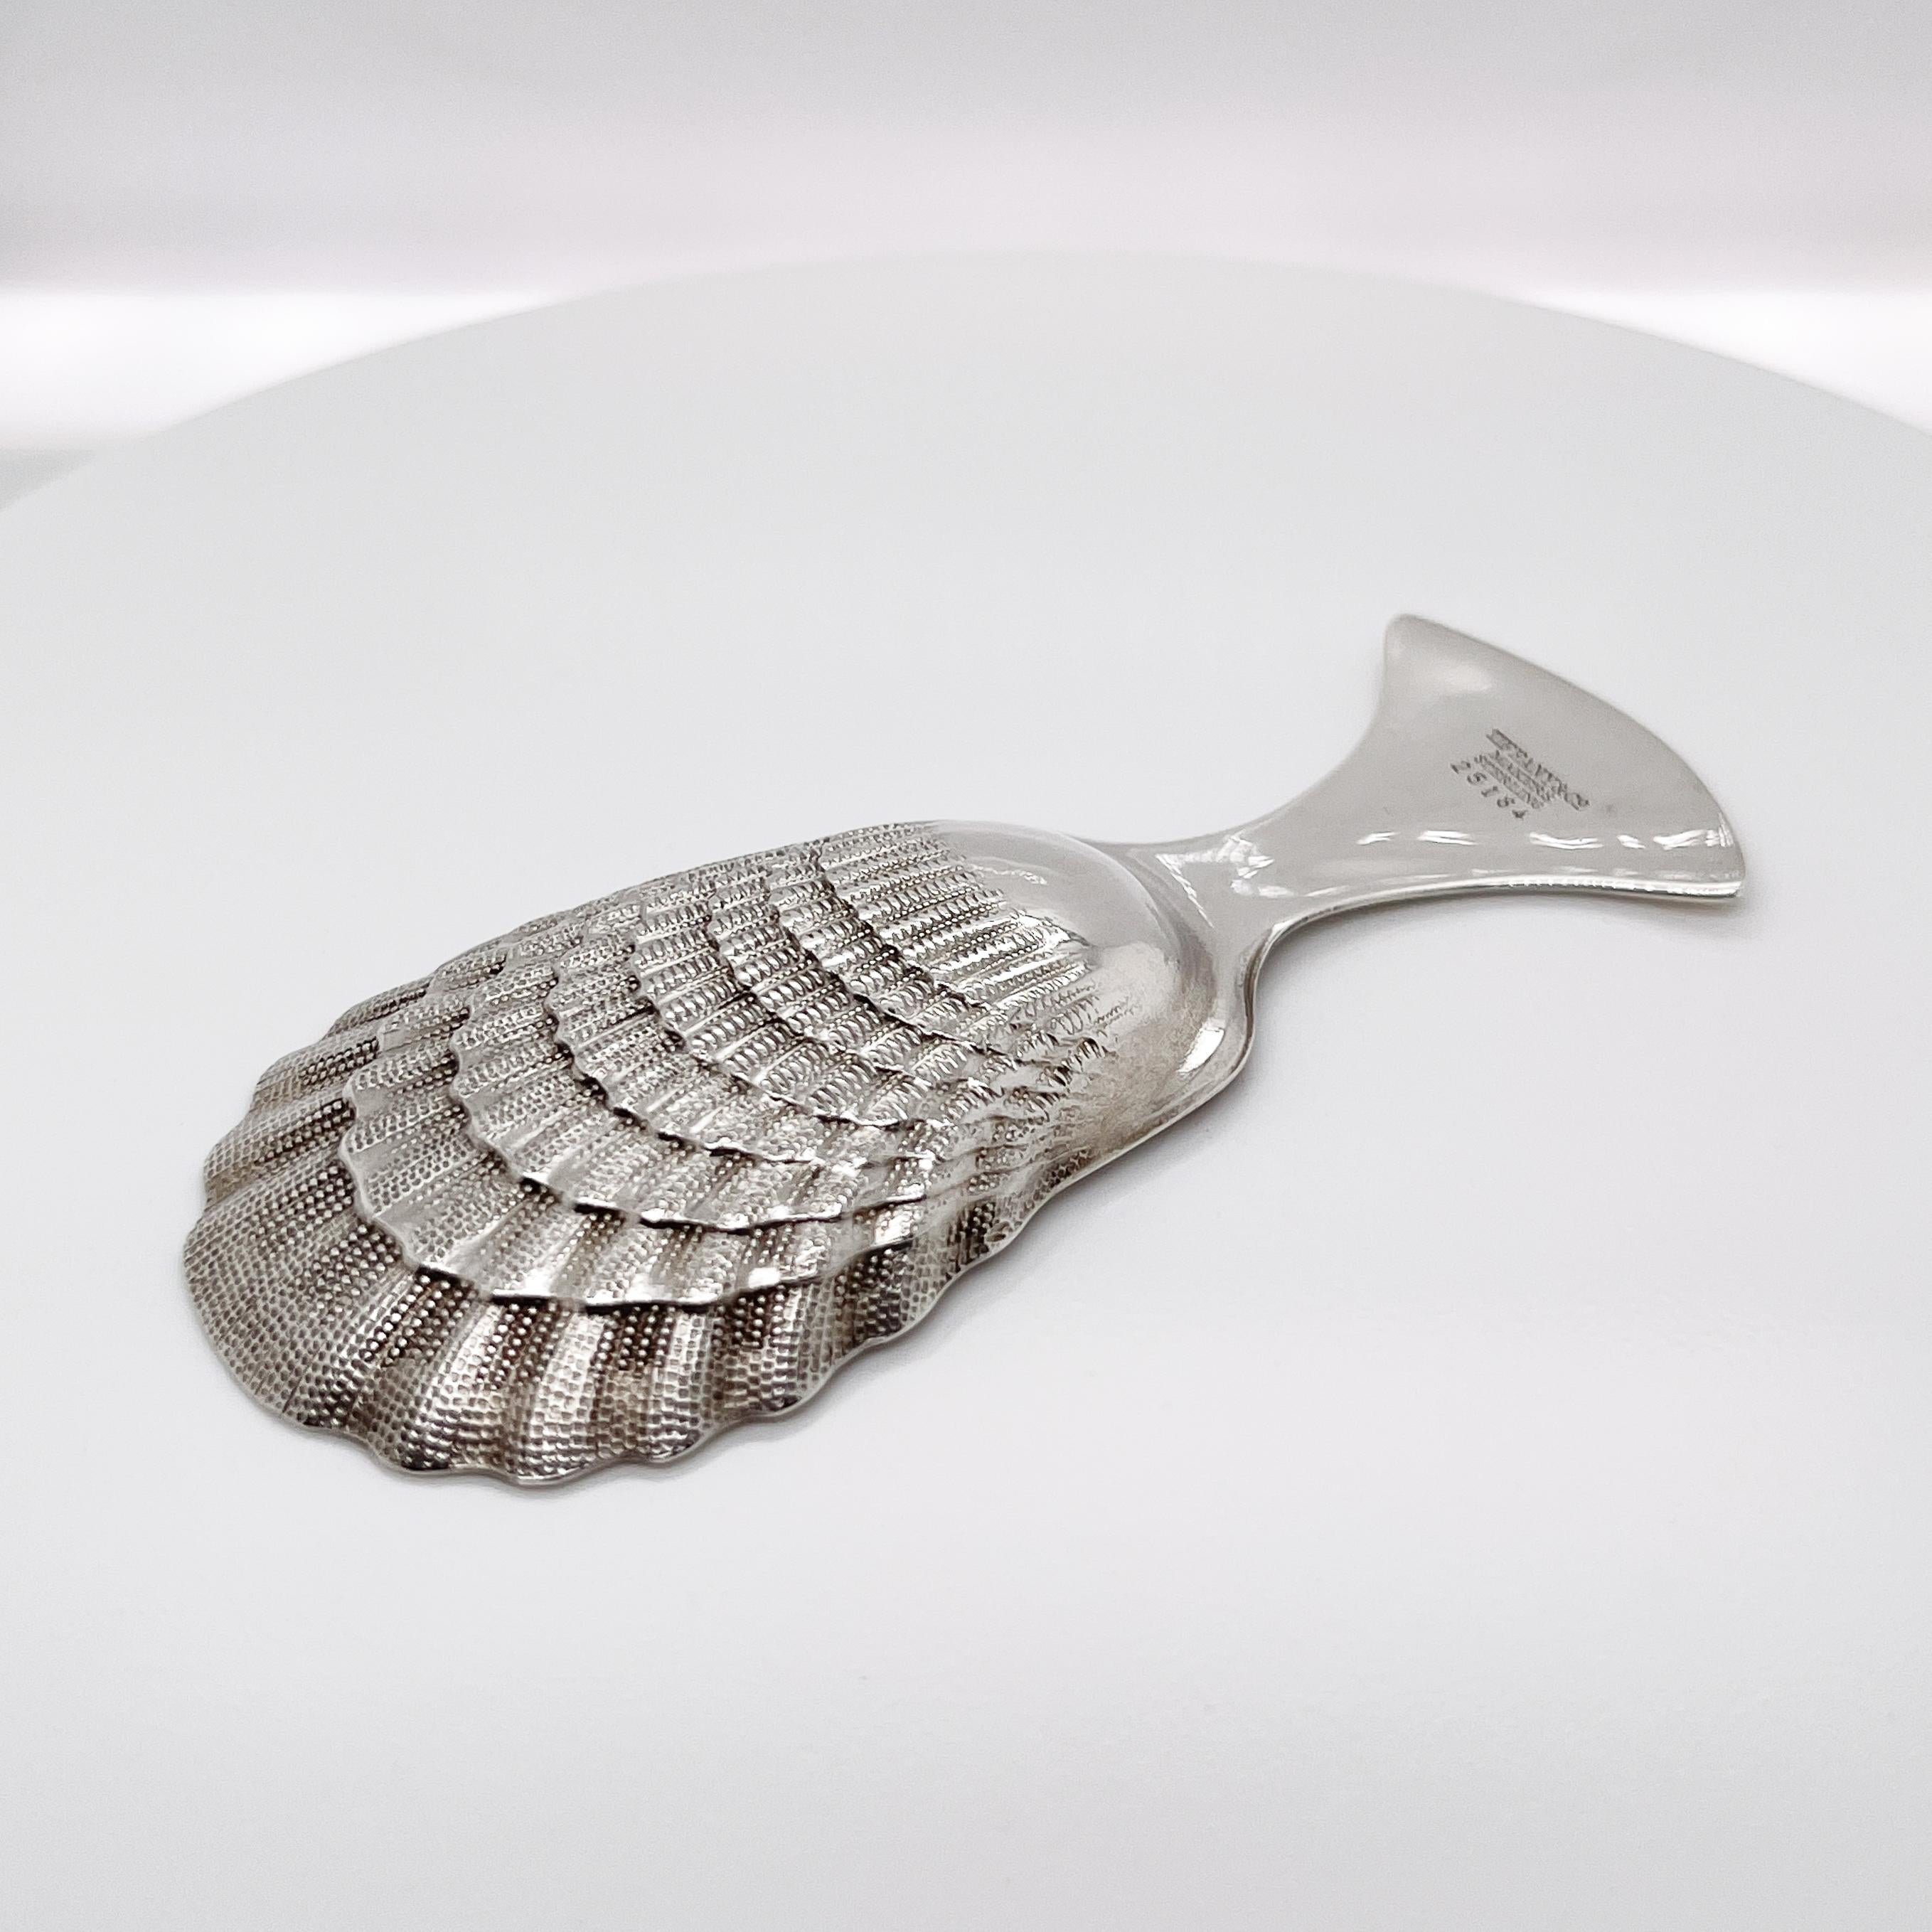 shell shaped spoon